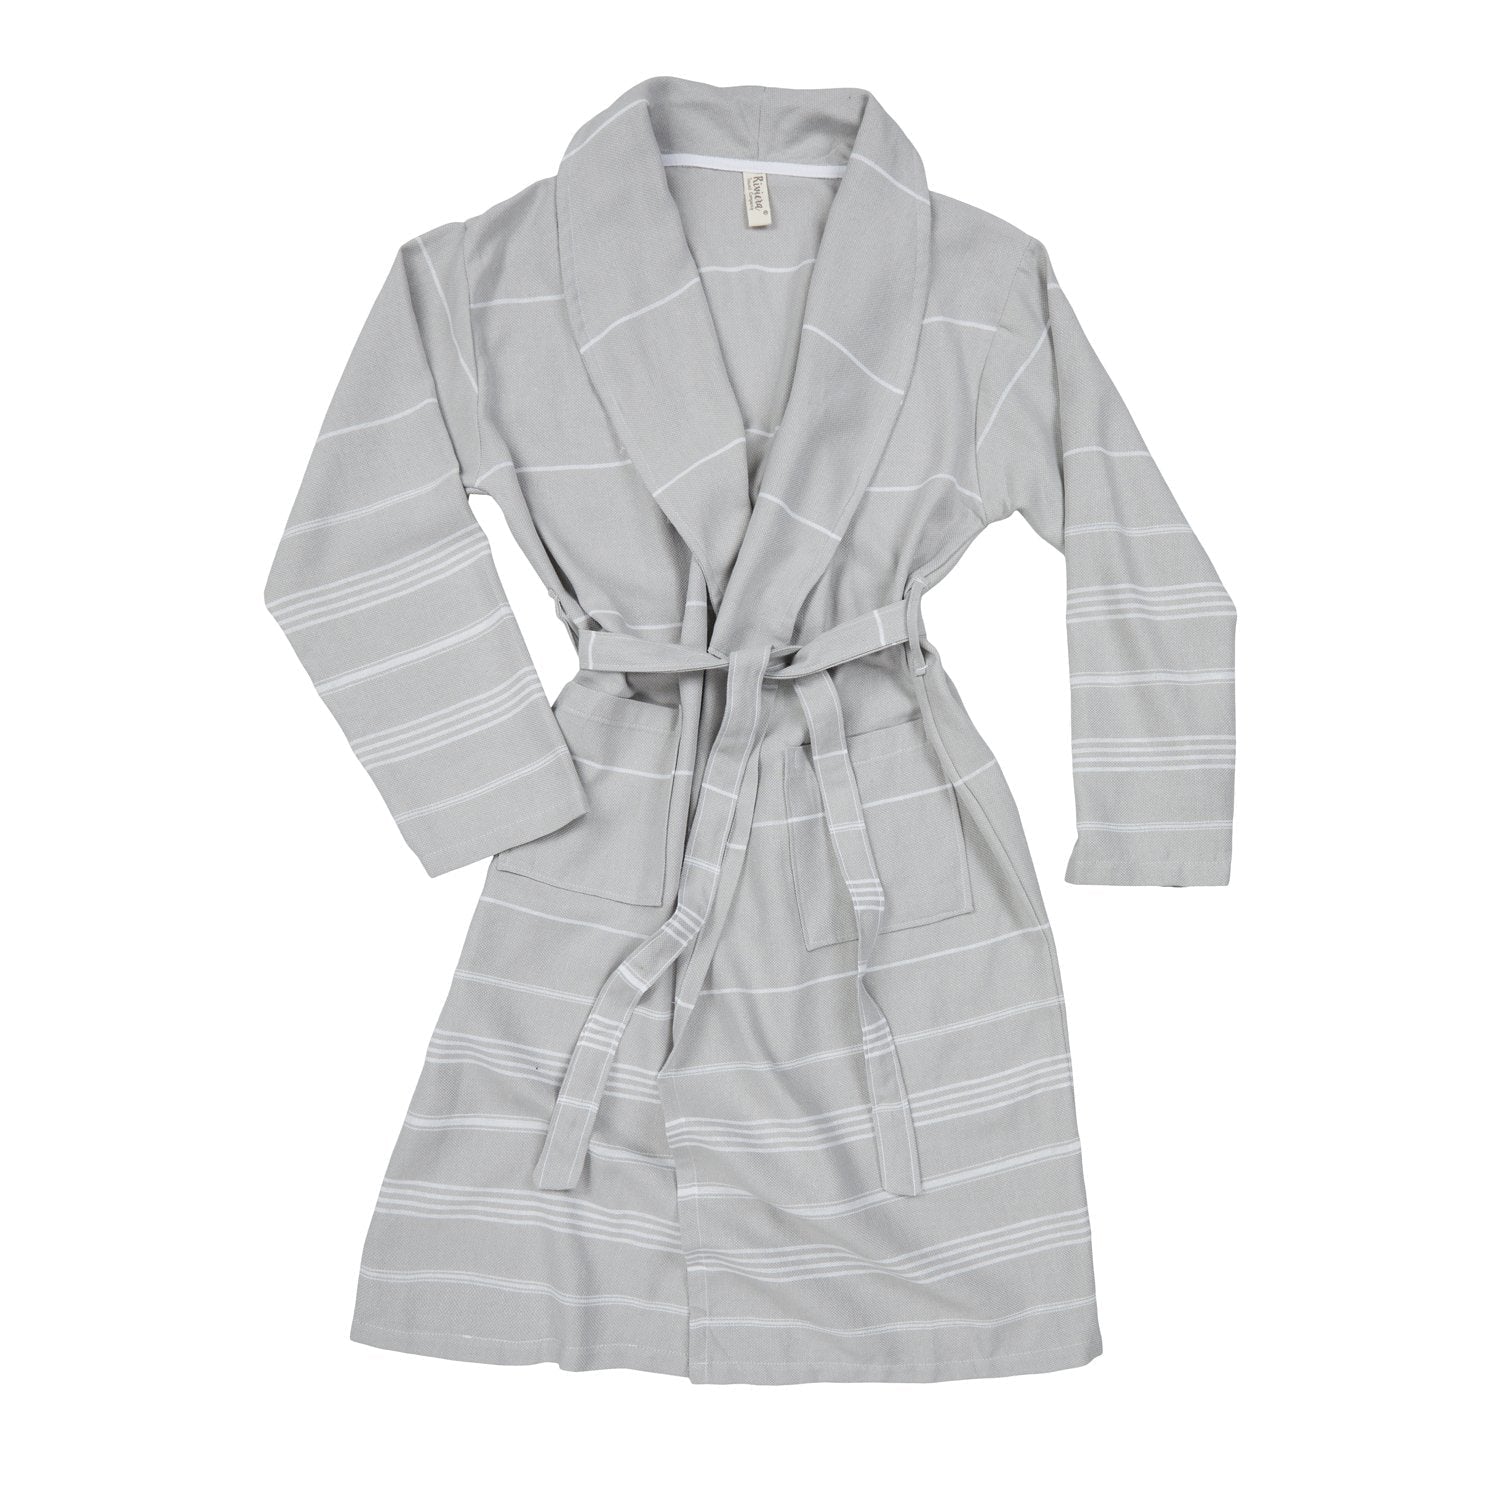 Robes - Essential Bathrobe With Drawstring Bag